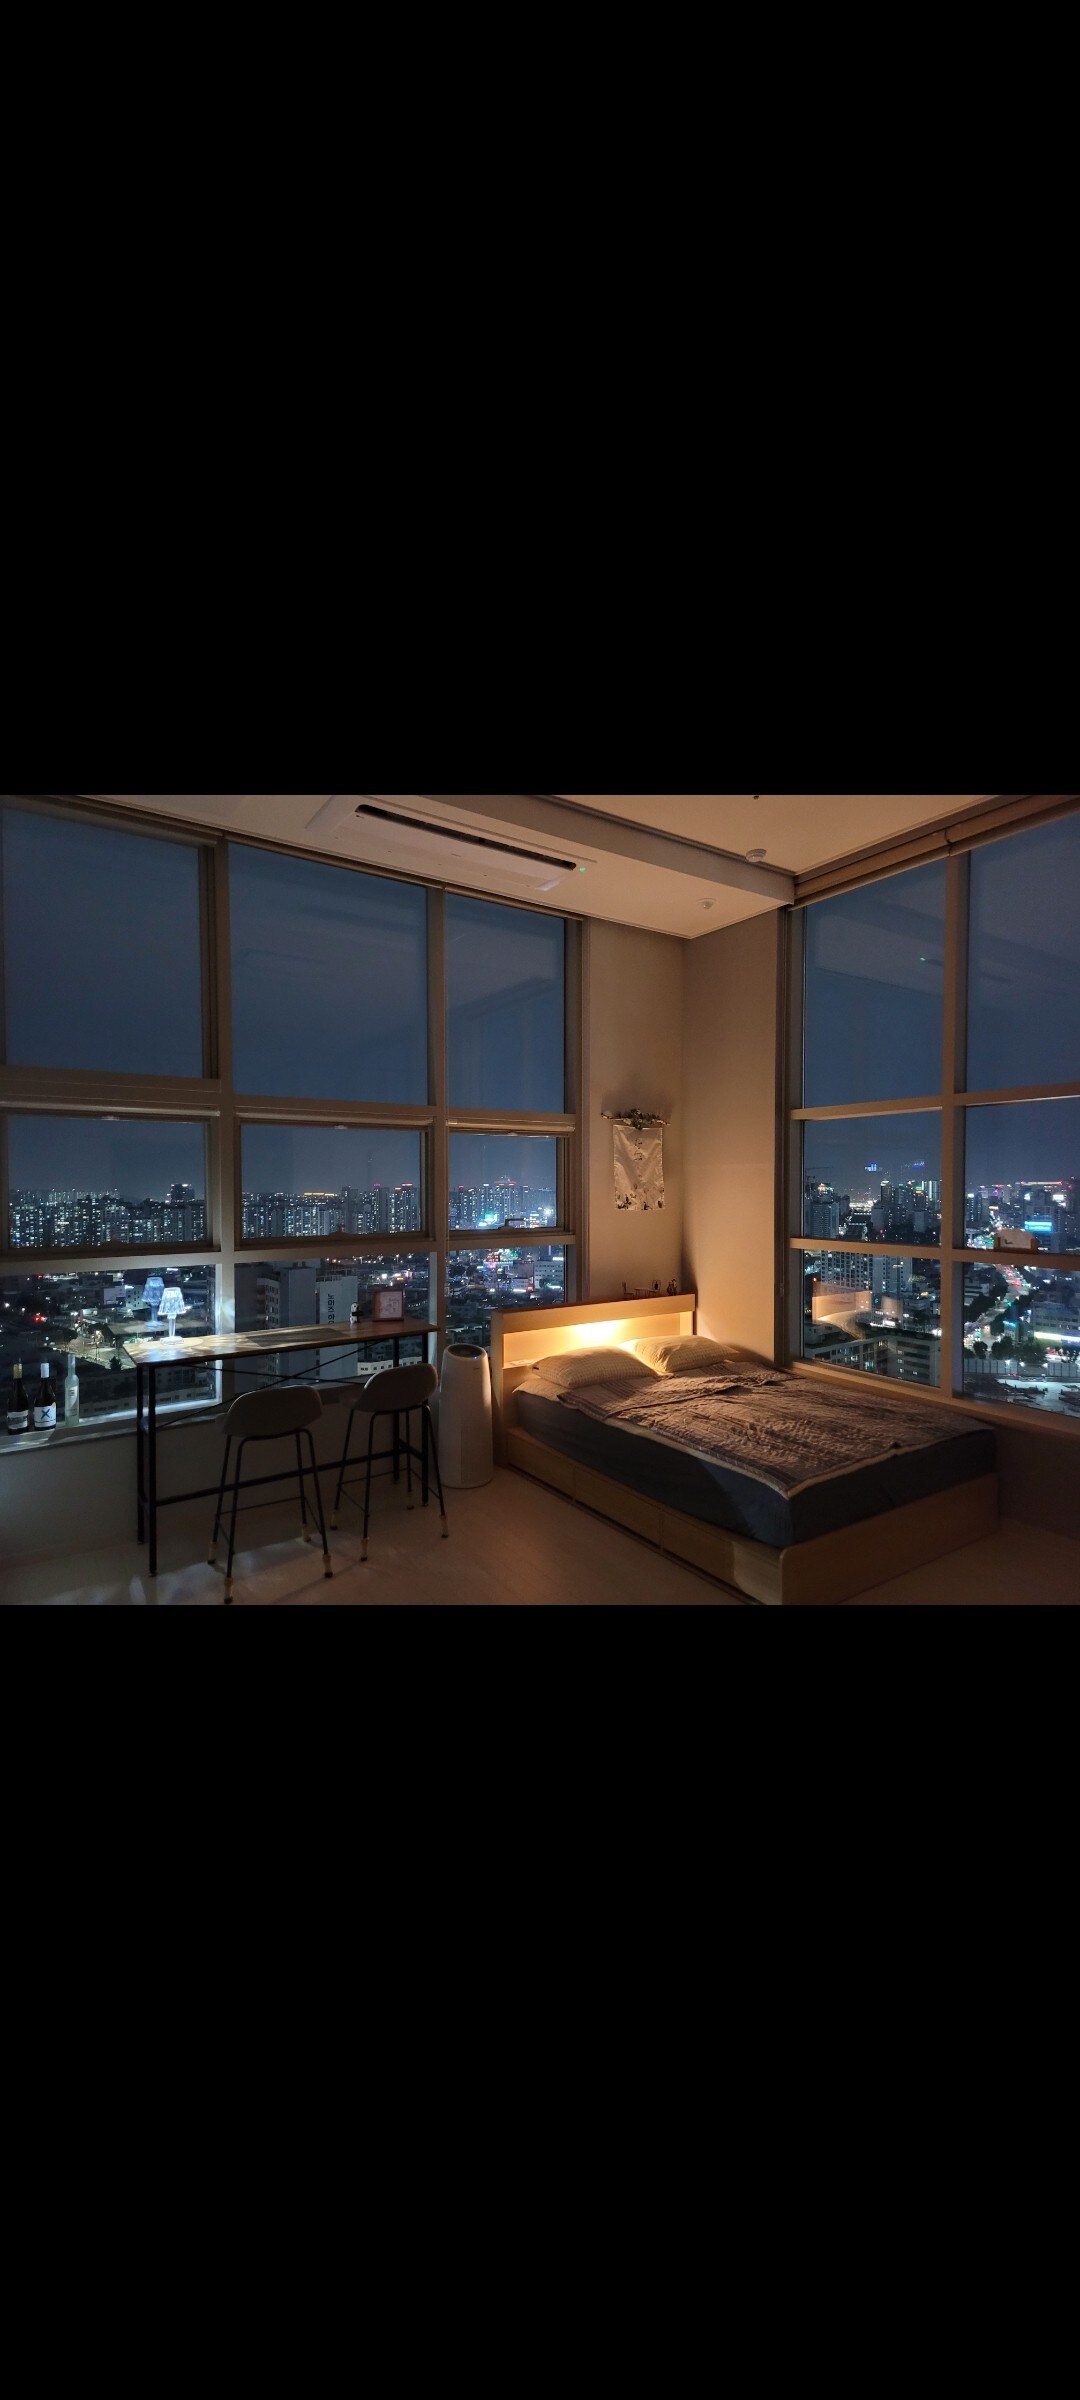 @ Dongseong-ro最舒适的
@ Dongseong-ro最好的Loft
@您自己的秘密房间